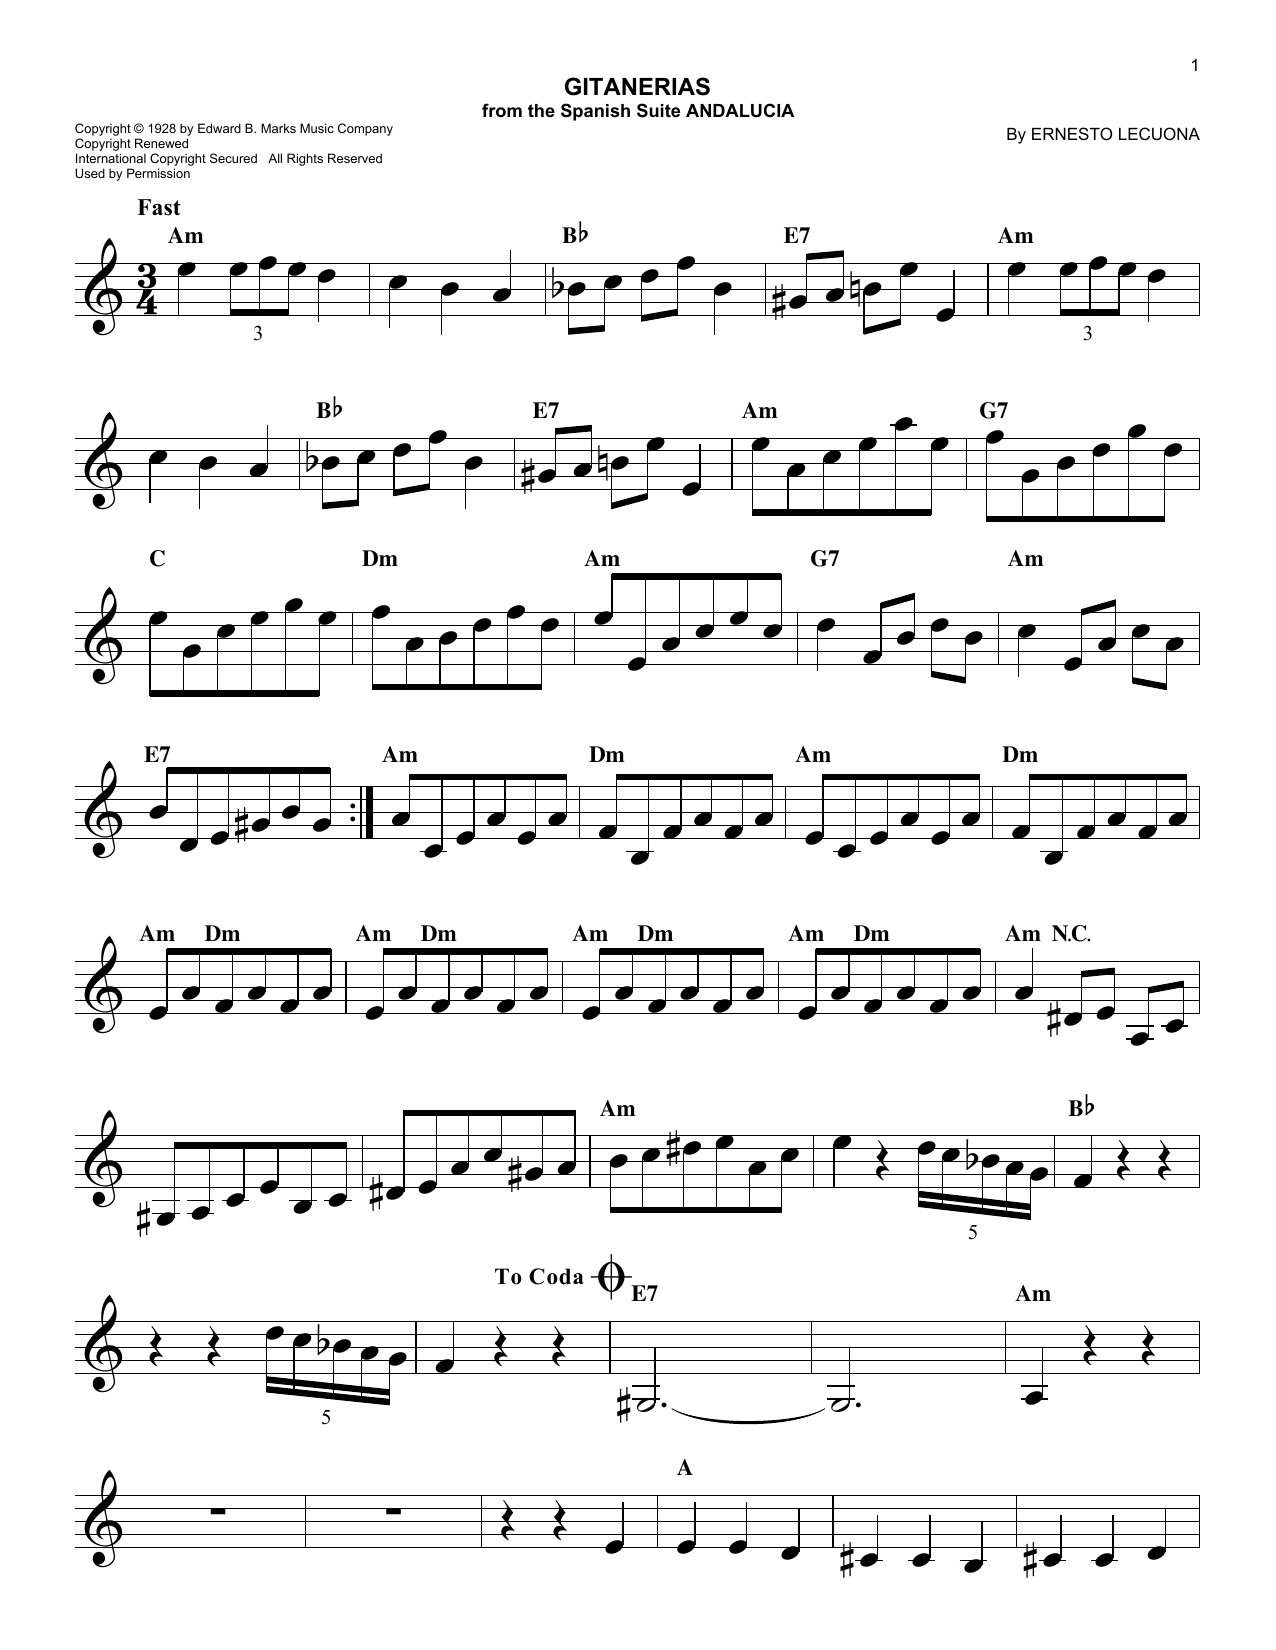 Ernesto Lecuona Gitanerias sheet music notes and chords arranged for Lead Sheet / Fake Book